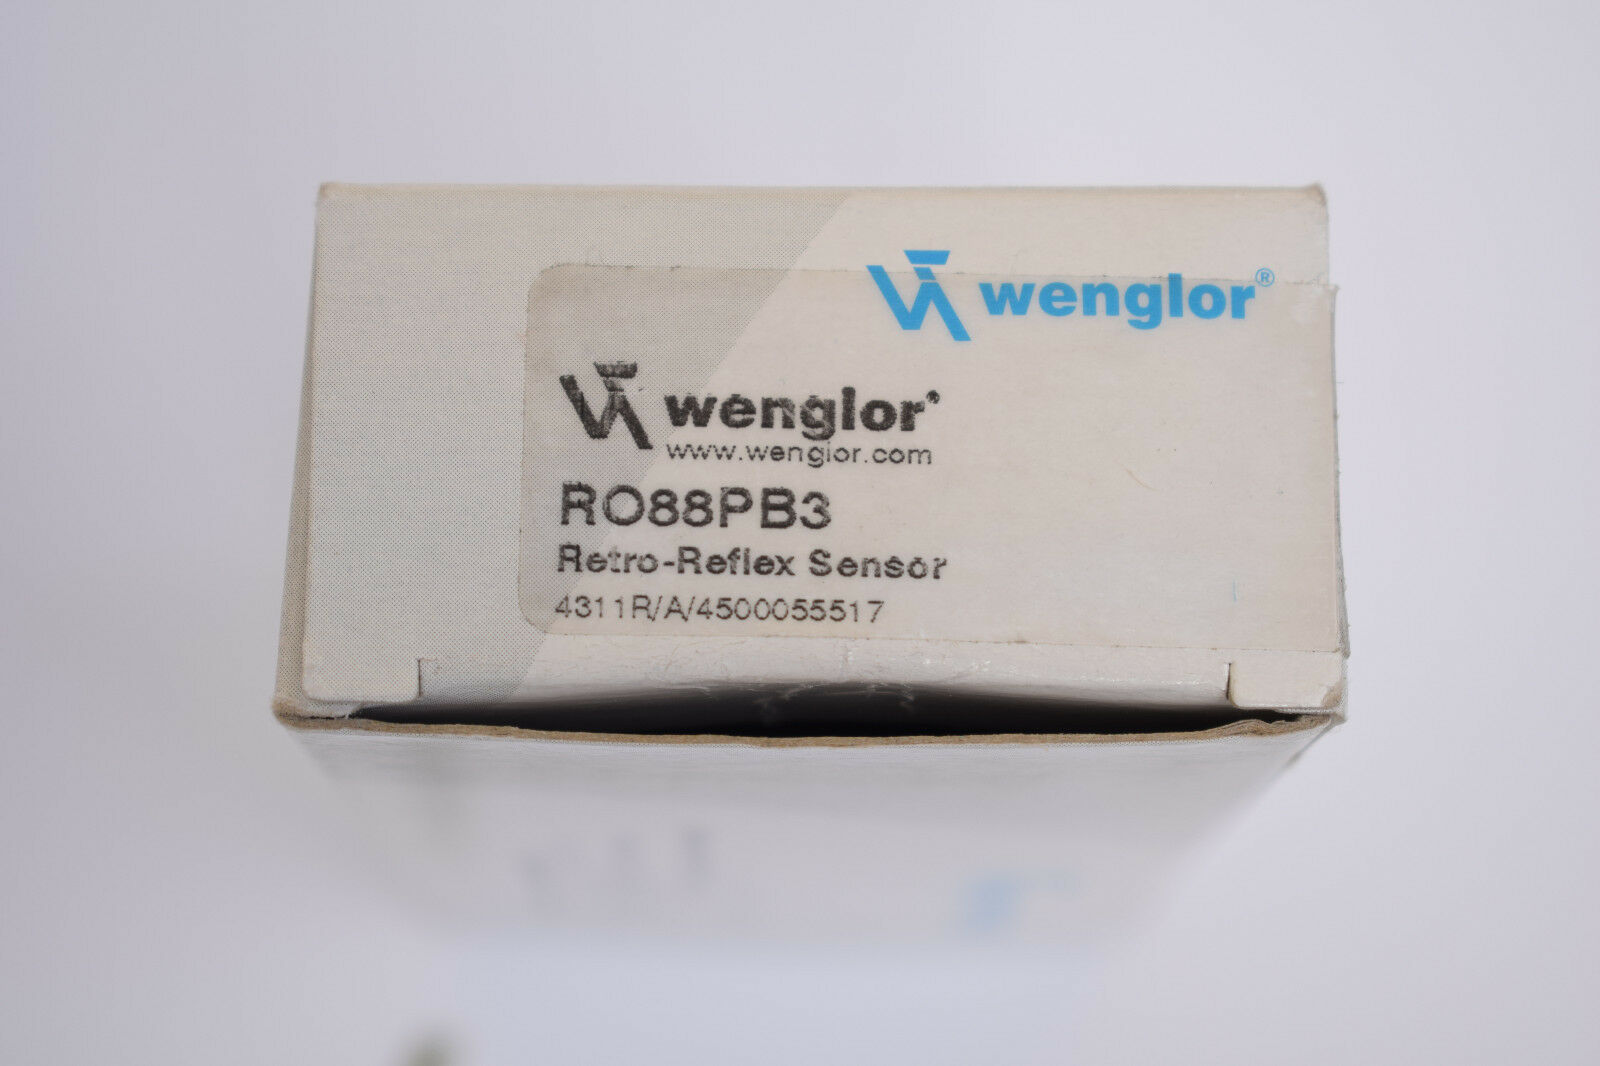 Wenglor Retro-Reflex Sensor RO88PB3 